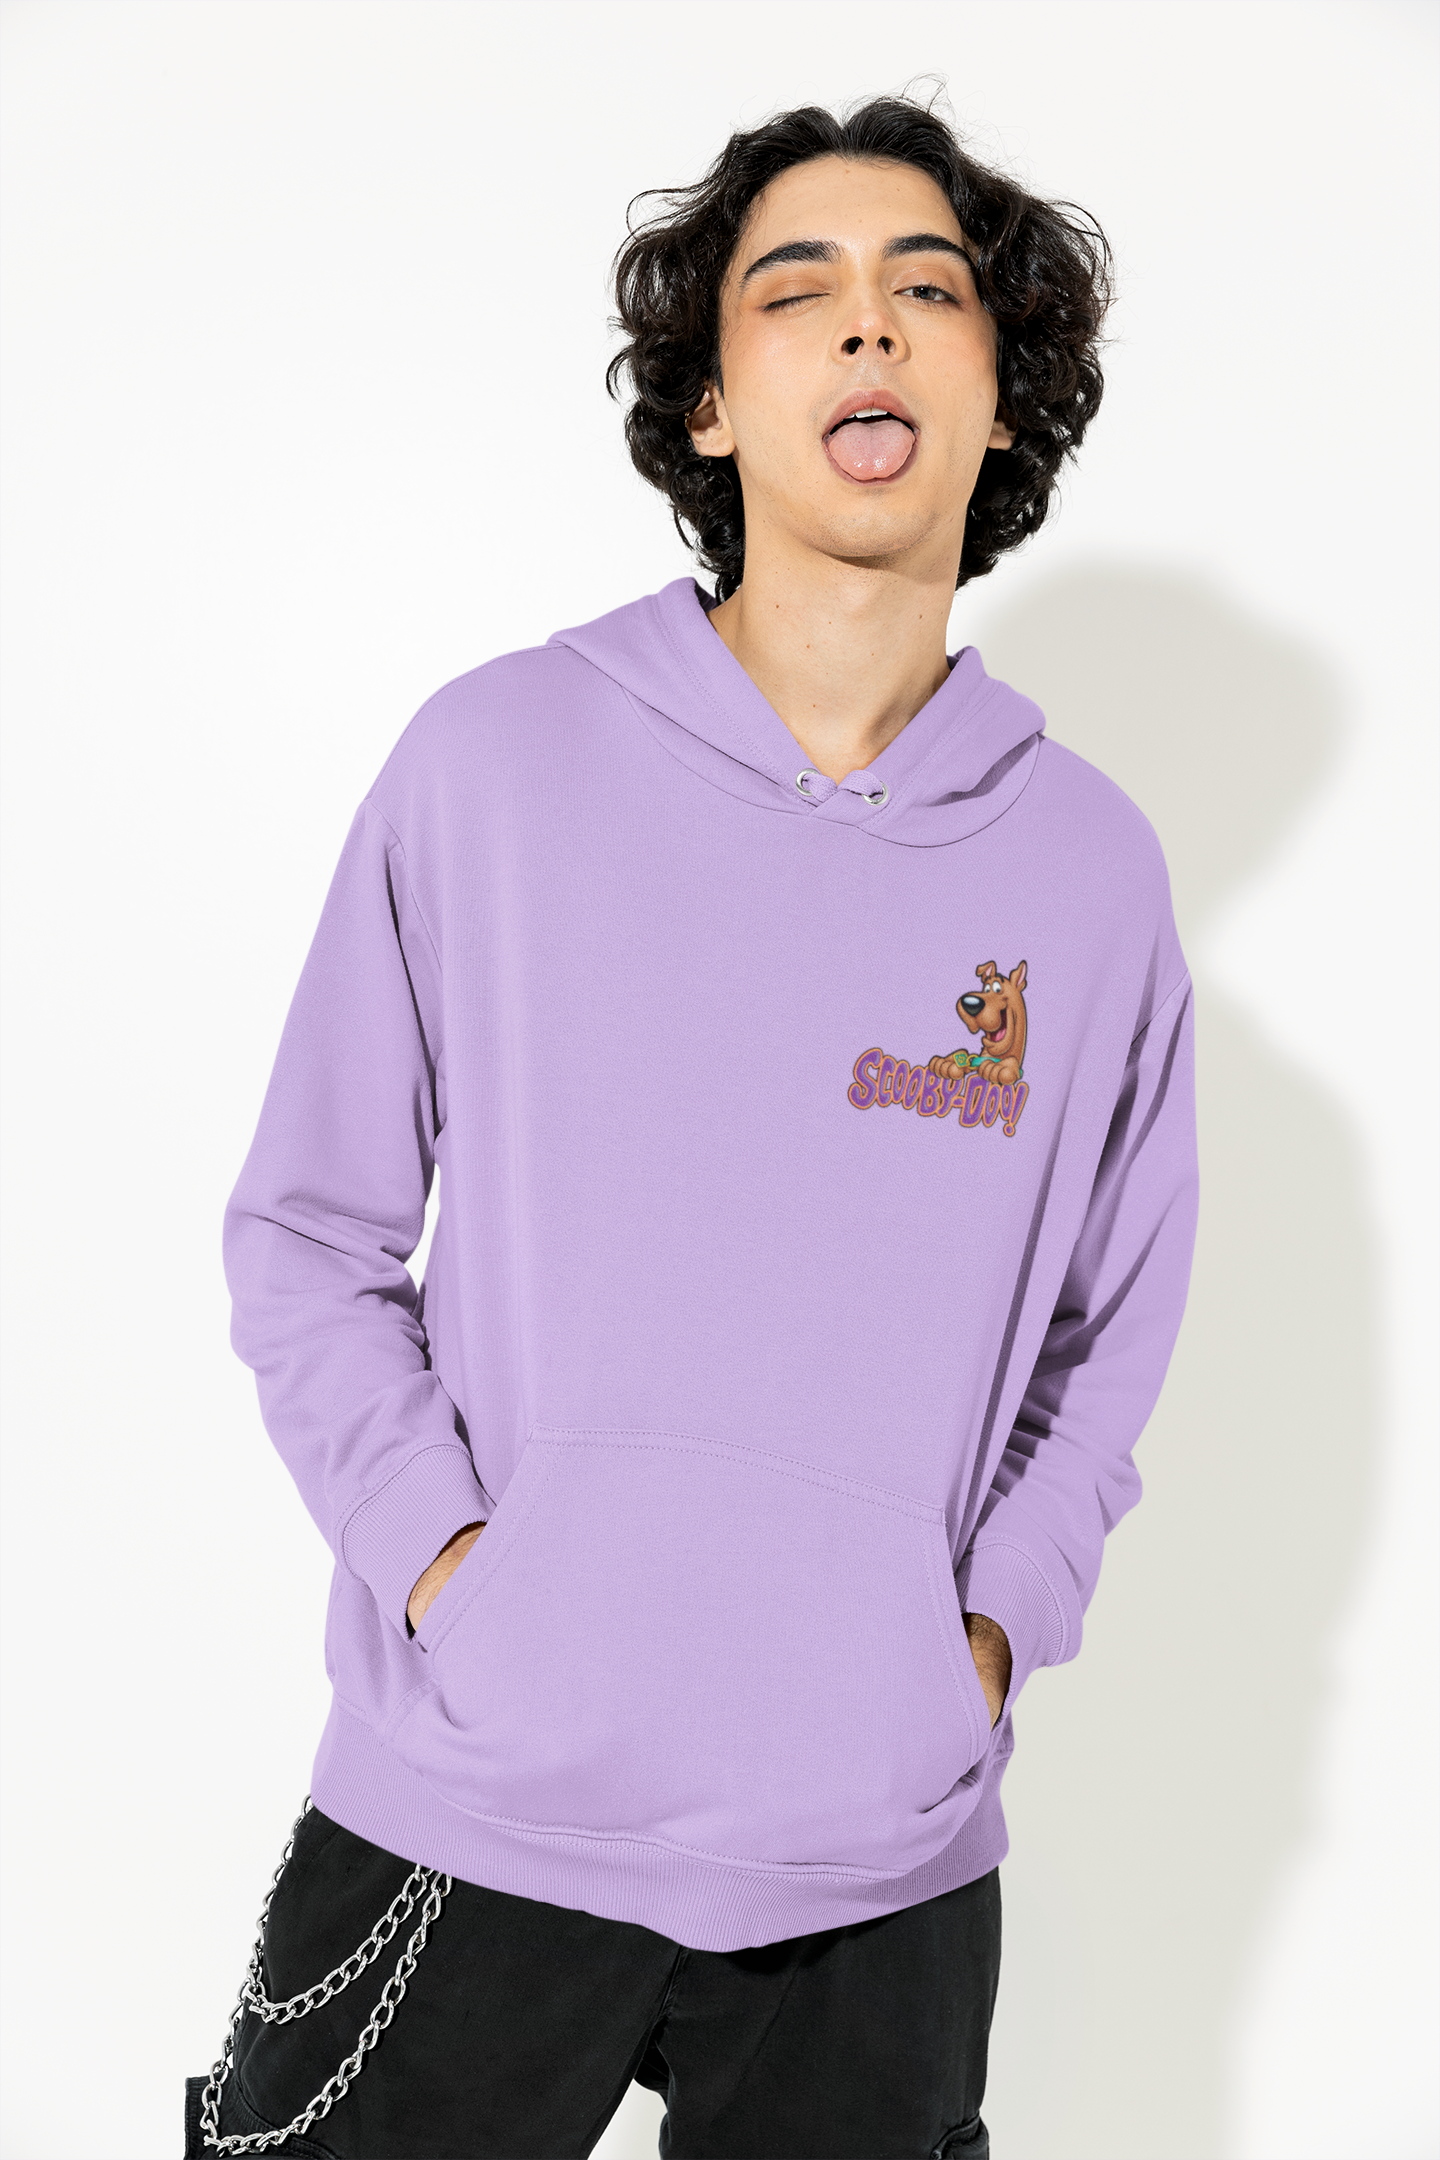 Scooby Doo | Disney | Premium Unisex Winter Hoodie